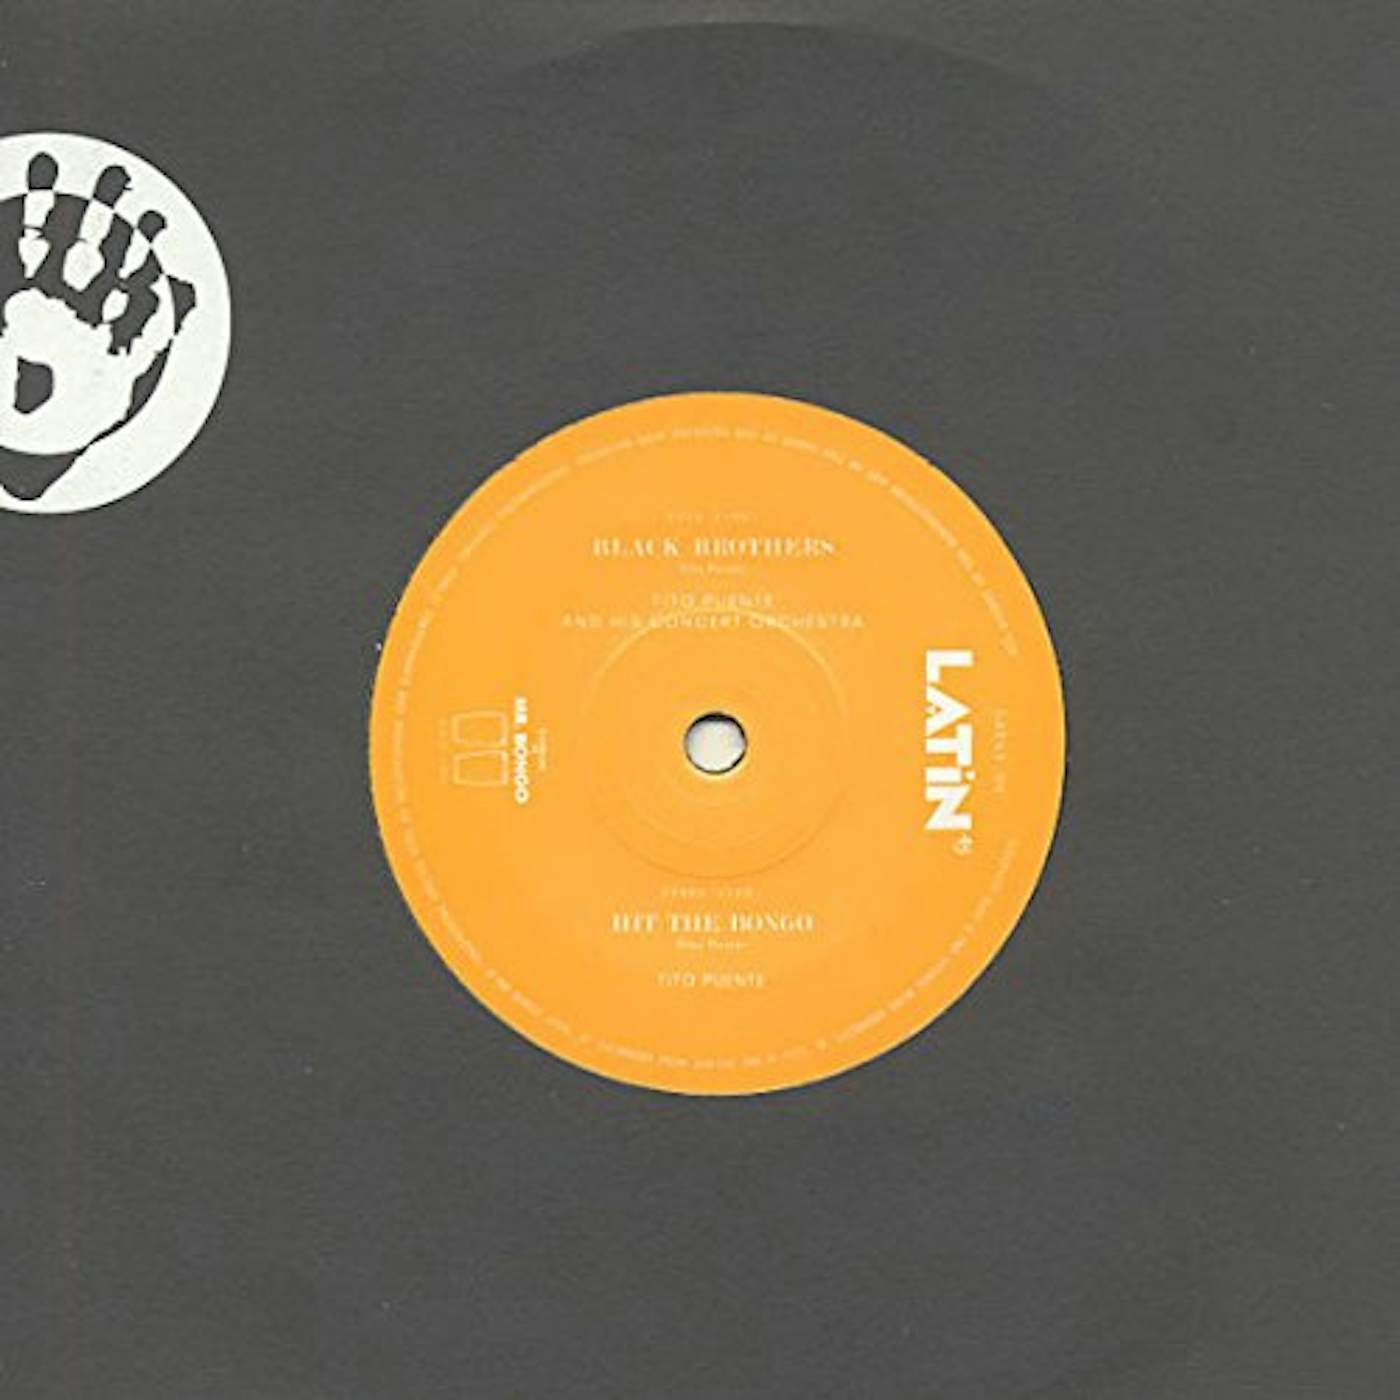 Tito Puente BLACK BROTHERS / HIT THE BONGO Vinyl Record